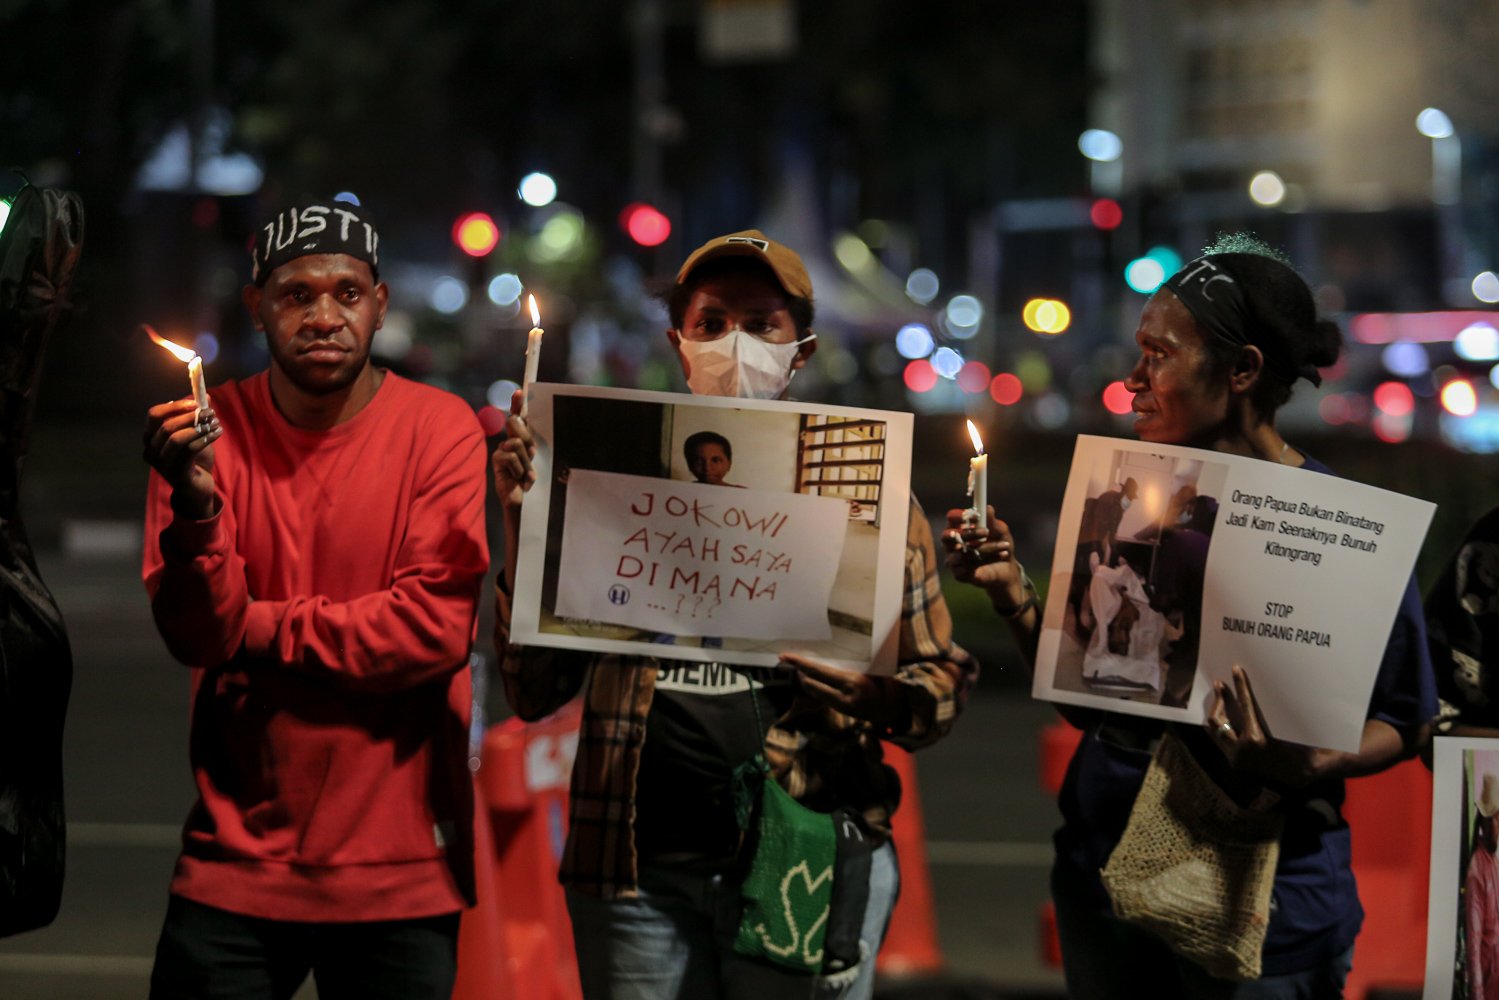 Massa yang tergabung dalam Front Mahasiswa Papua Peduli Korban Kekerasan memegang poster dan lilin saat berunjuk rasa di wilayah Patung Kuda, Jakarta, Jumat (16/9). Aksi seribu lilin tersebut dilakukan untuk solidaritas terhadap 4 korban mutilasi di Timika, Papua.